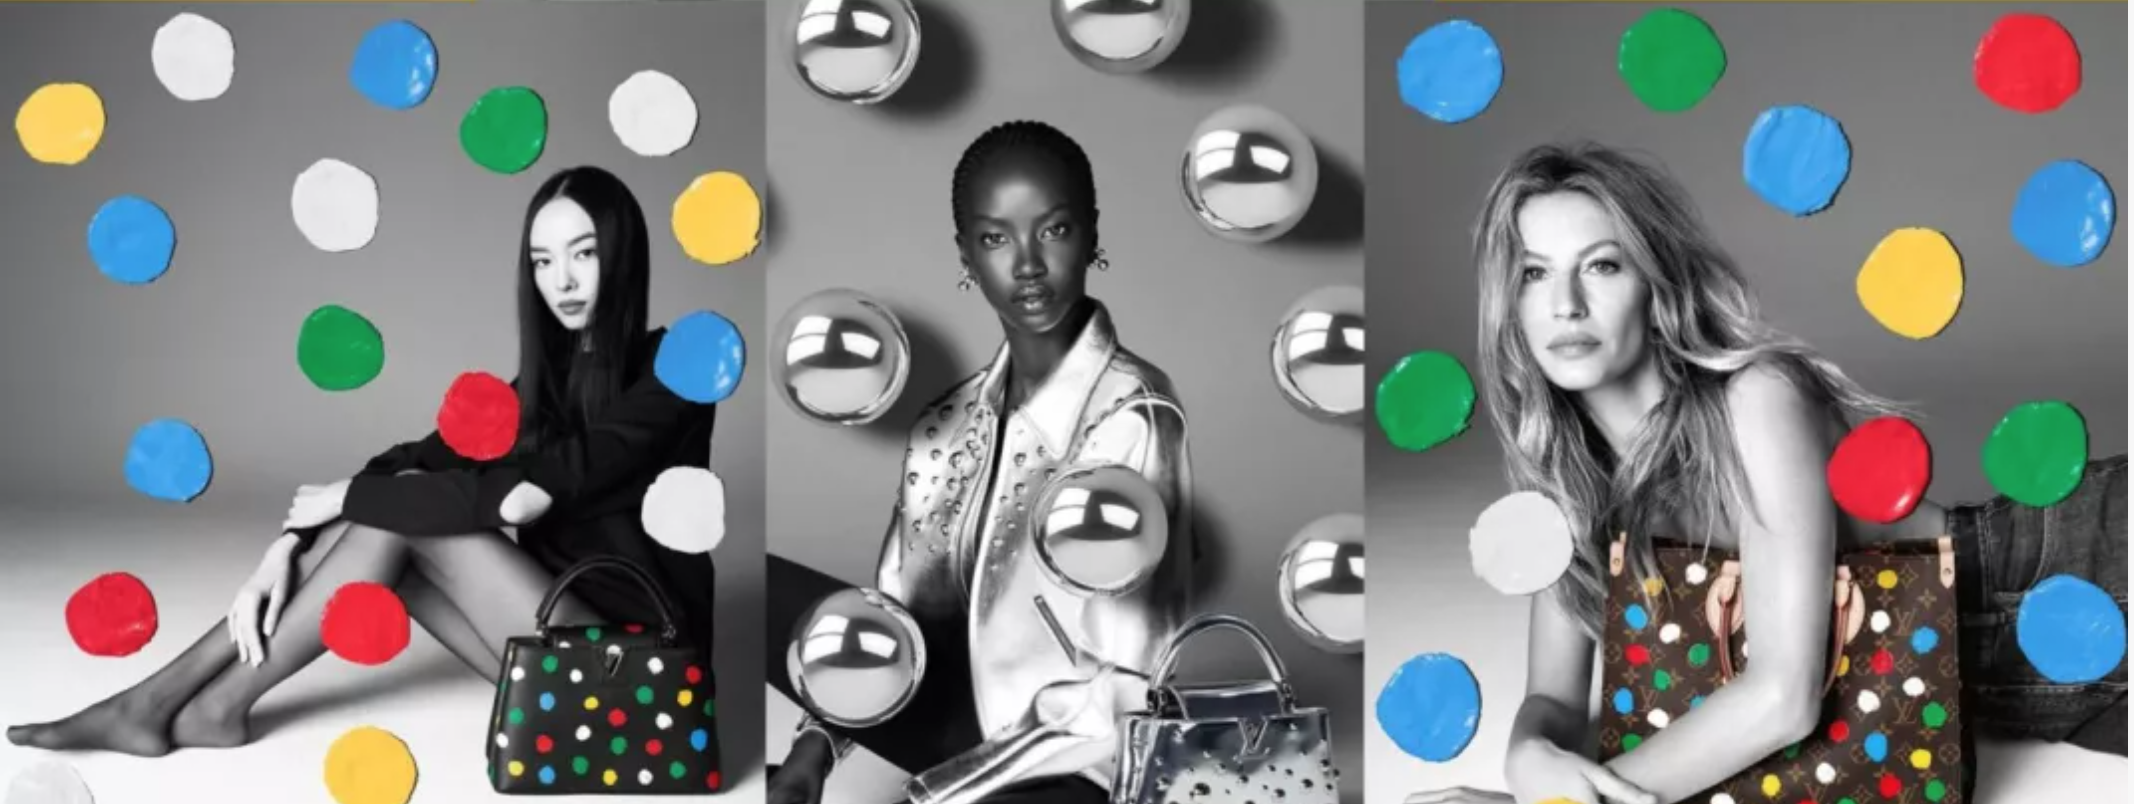 Louis Vuitton x Yayoi Kusama: A Fresh Take or Careless Mistake? — MADE IN  BED Magazine